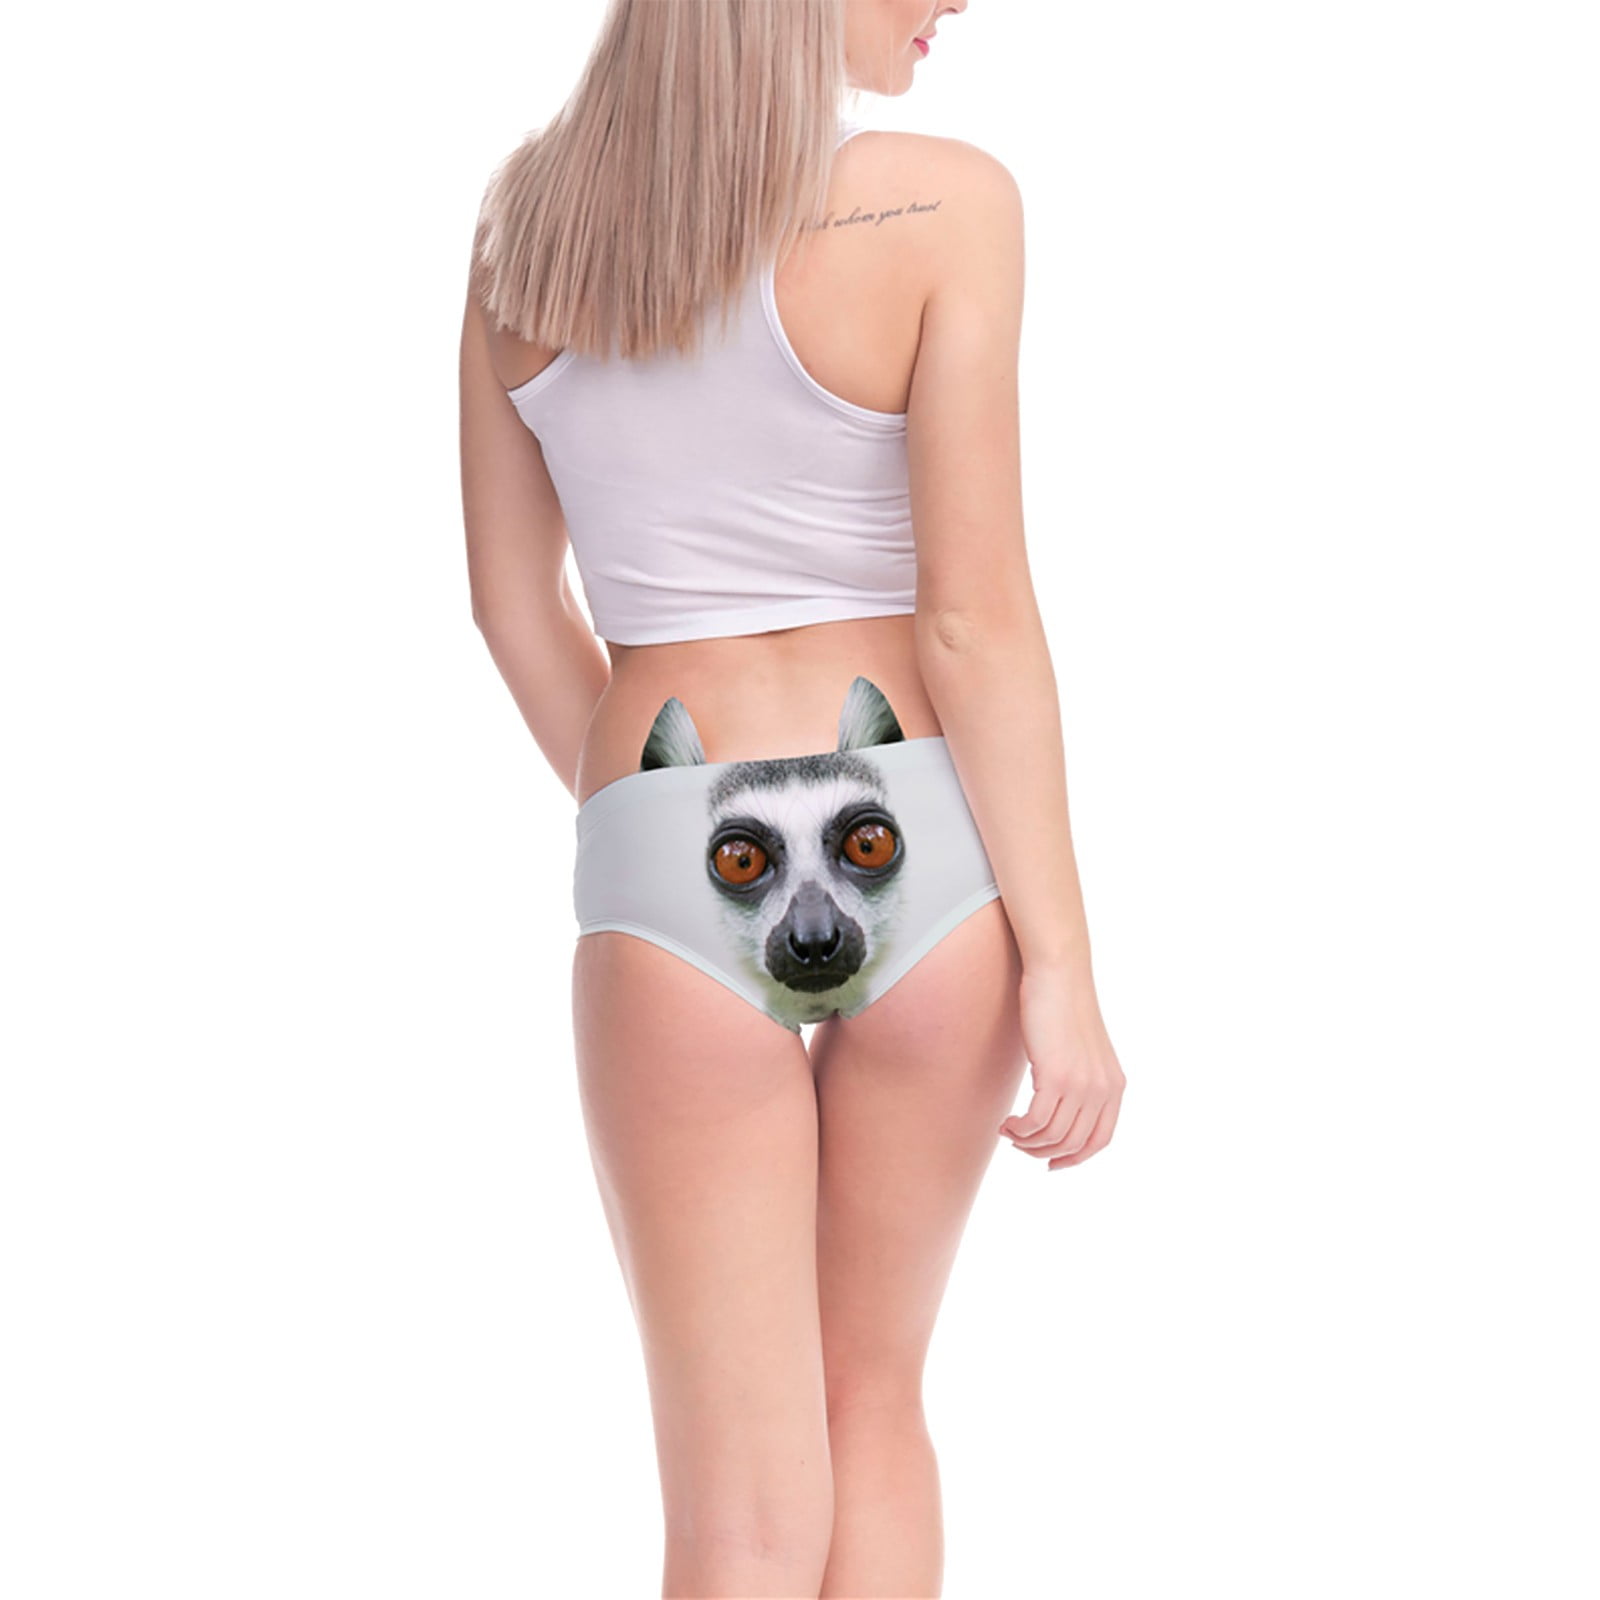 Frehsky underwear women Women's Flirty Funny 3D Printed Animal Middle Waist  Tail Underwears Briefs Gifts With Cute Ears White 